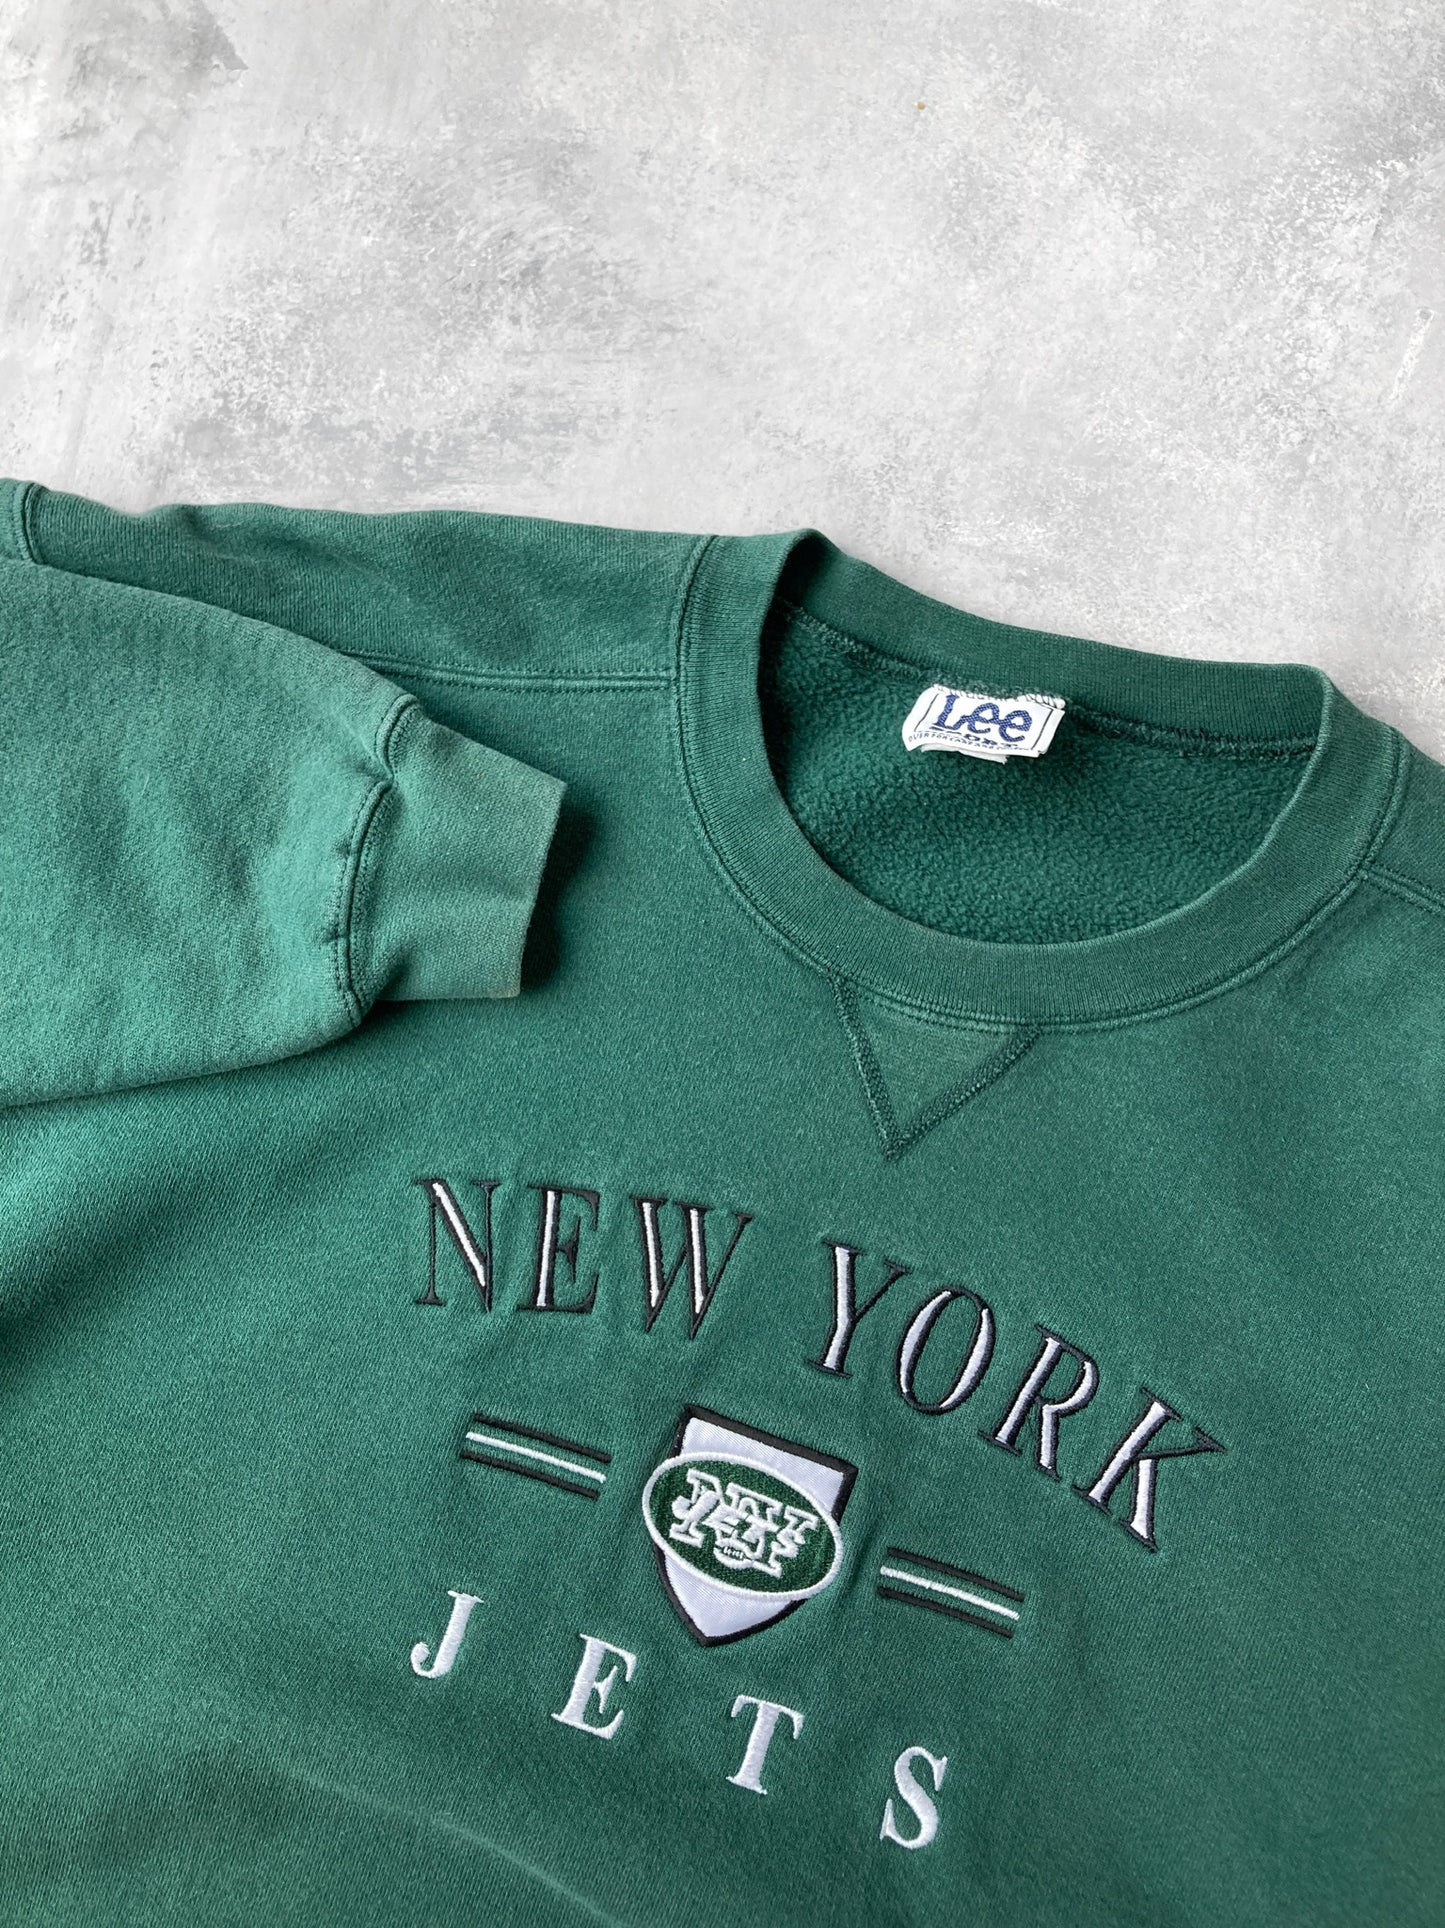 New York Jets Sweatshirt 90's - Large